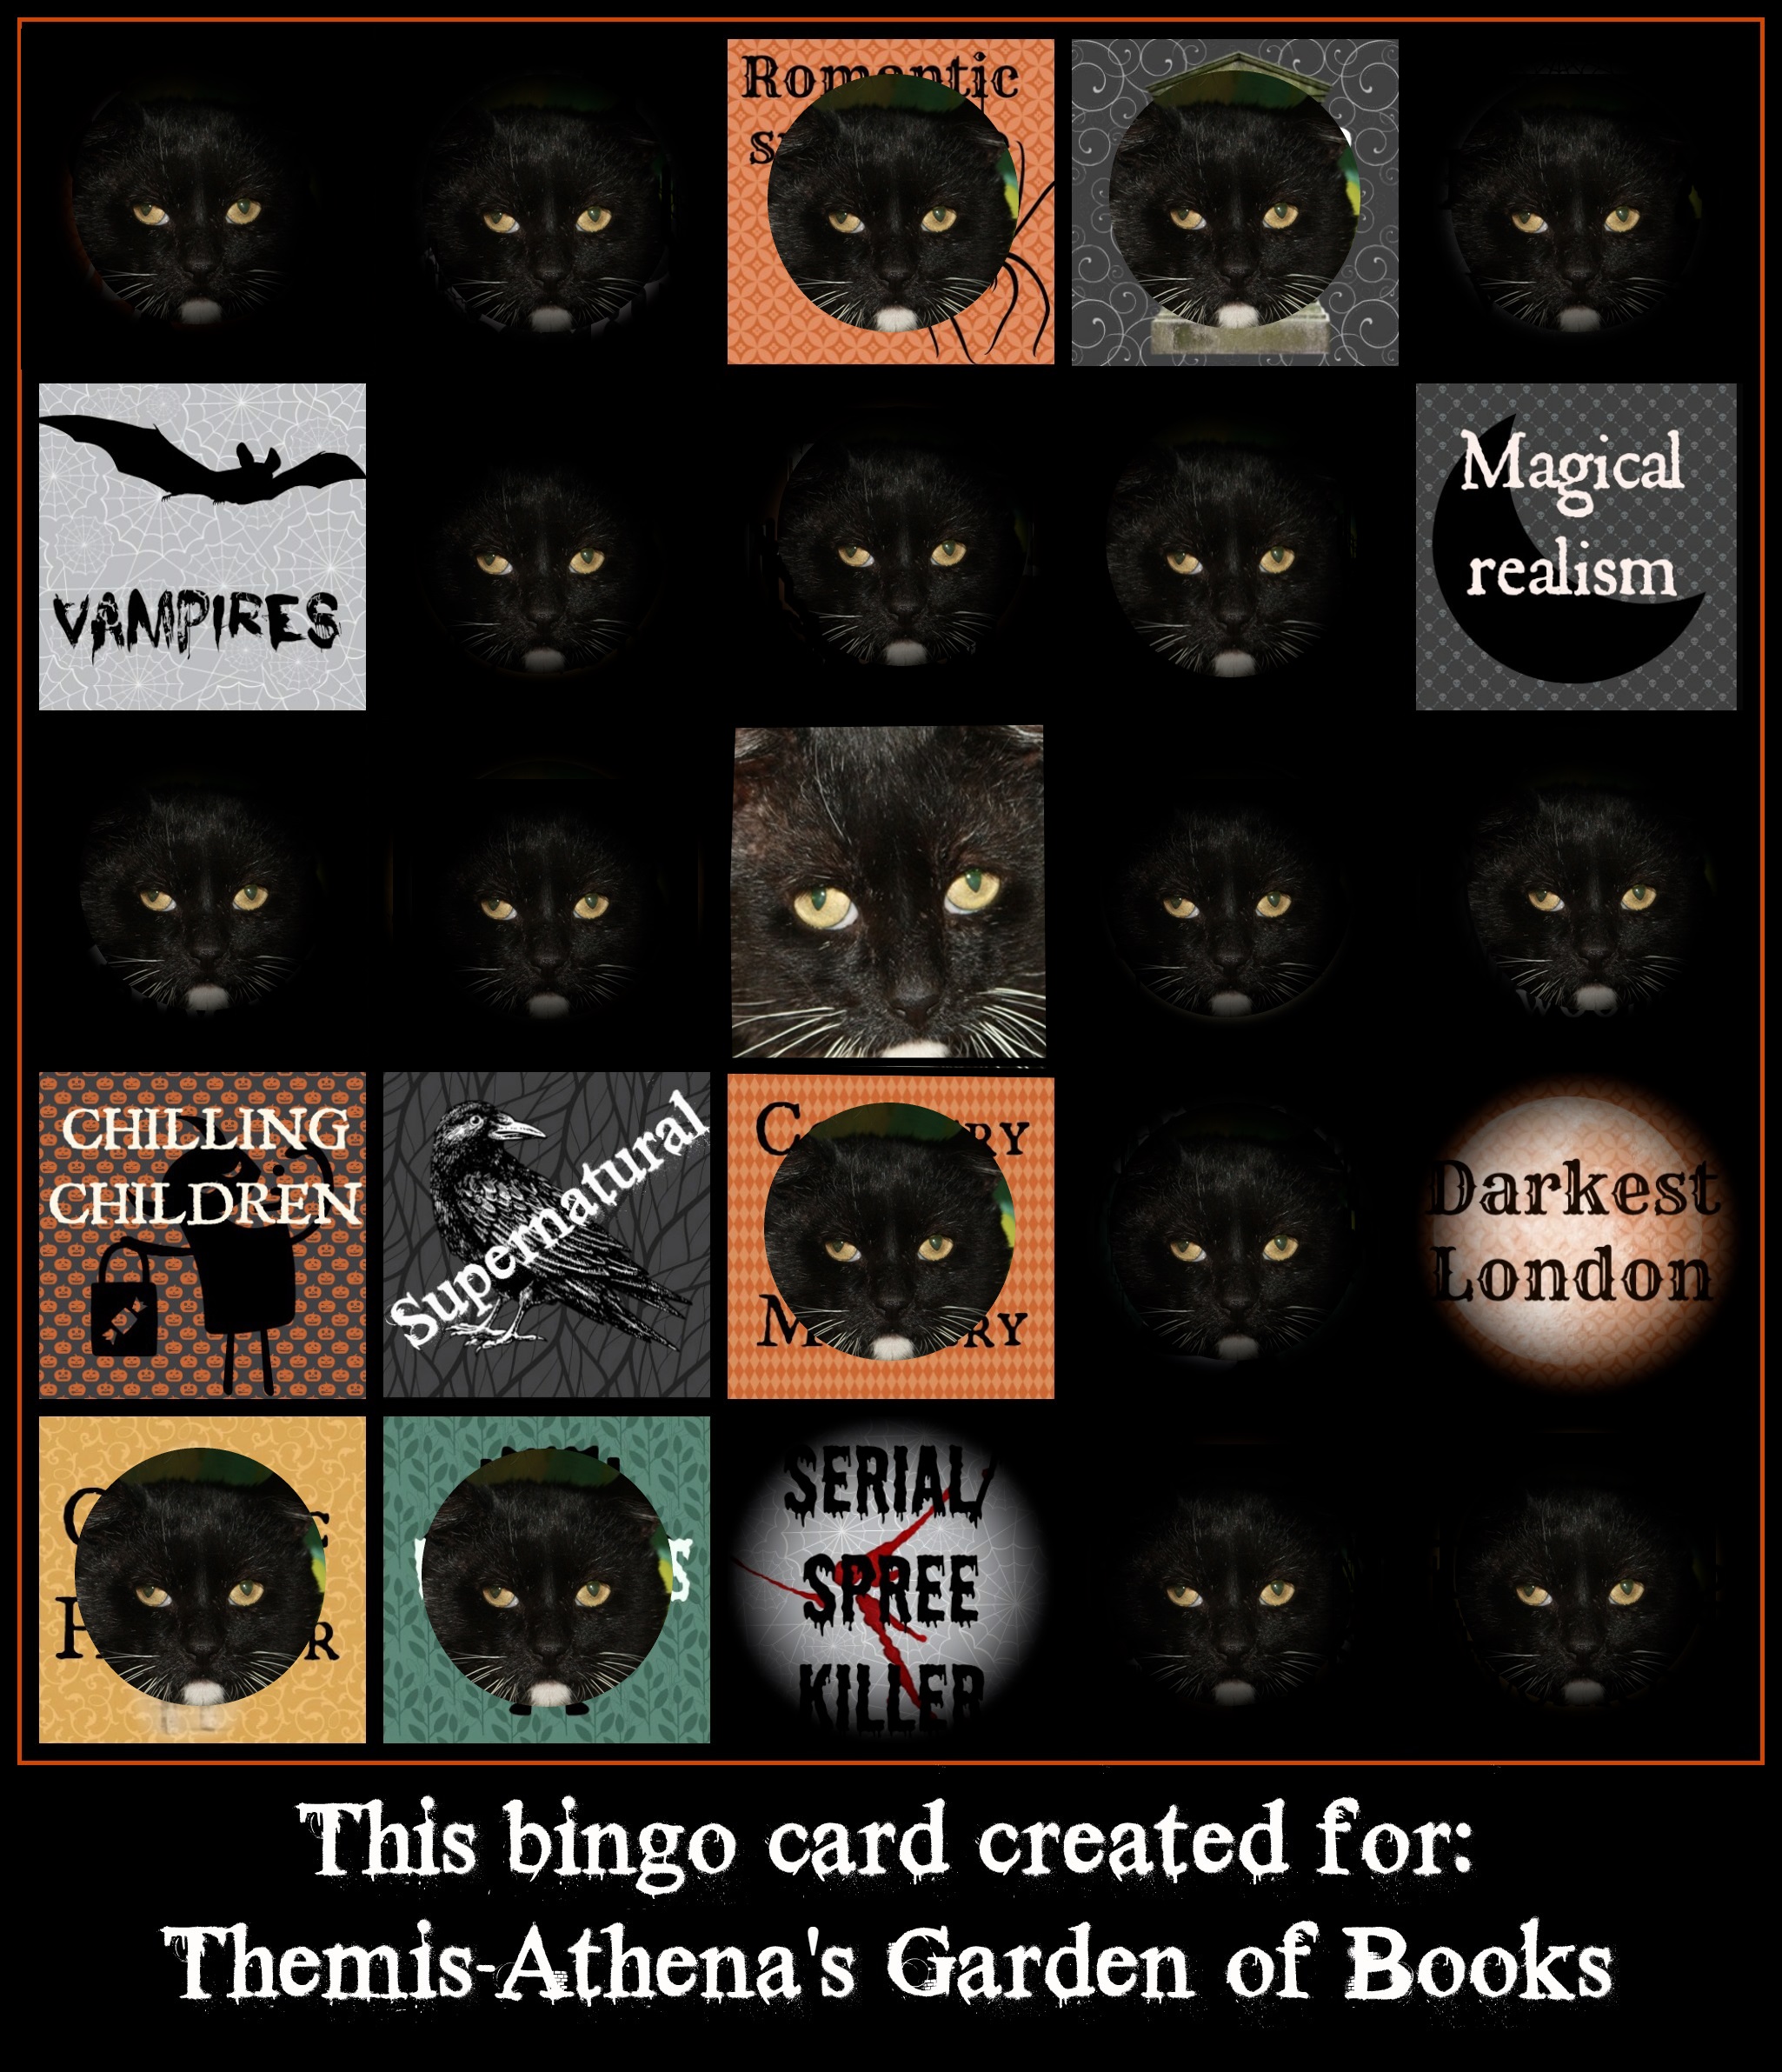 warrior cats! Bingo Card